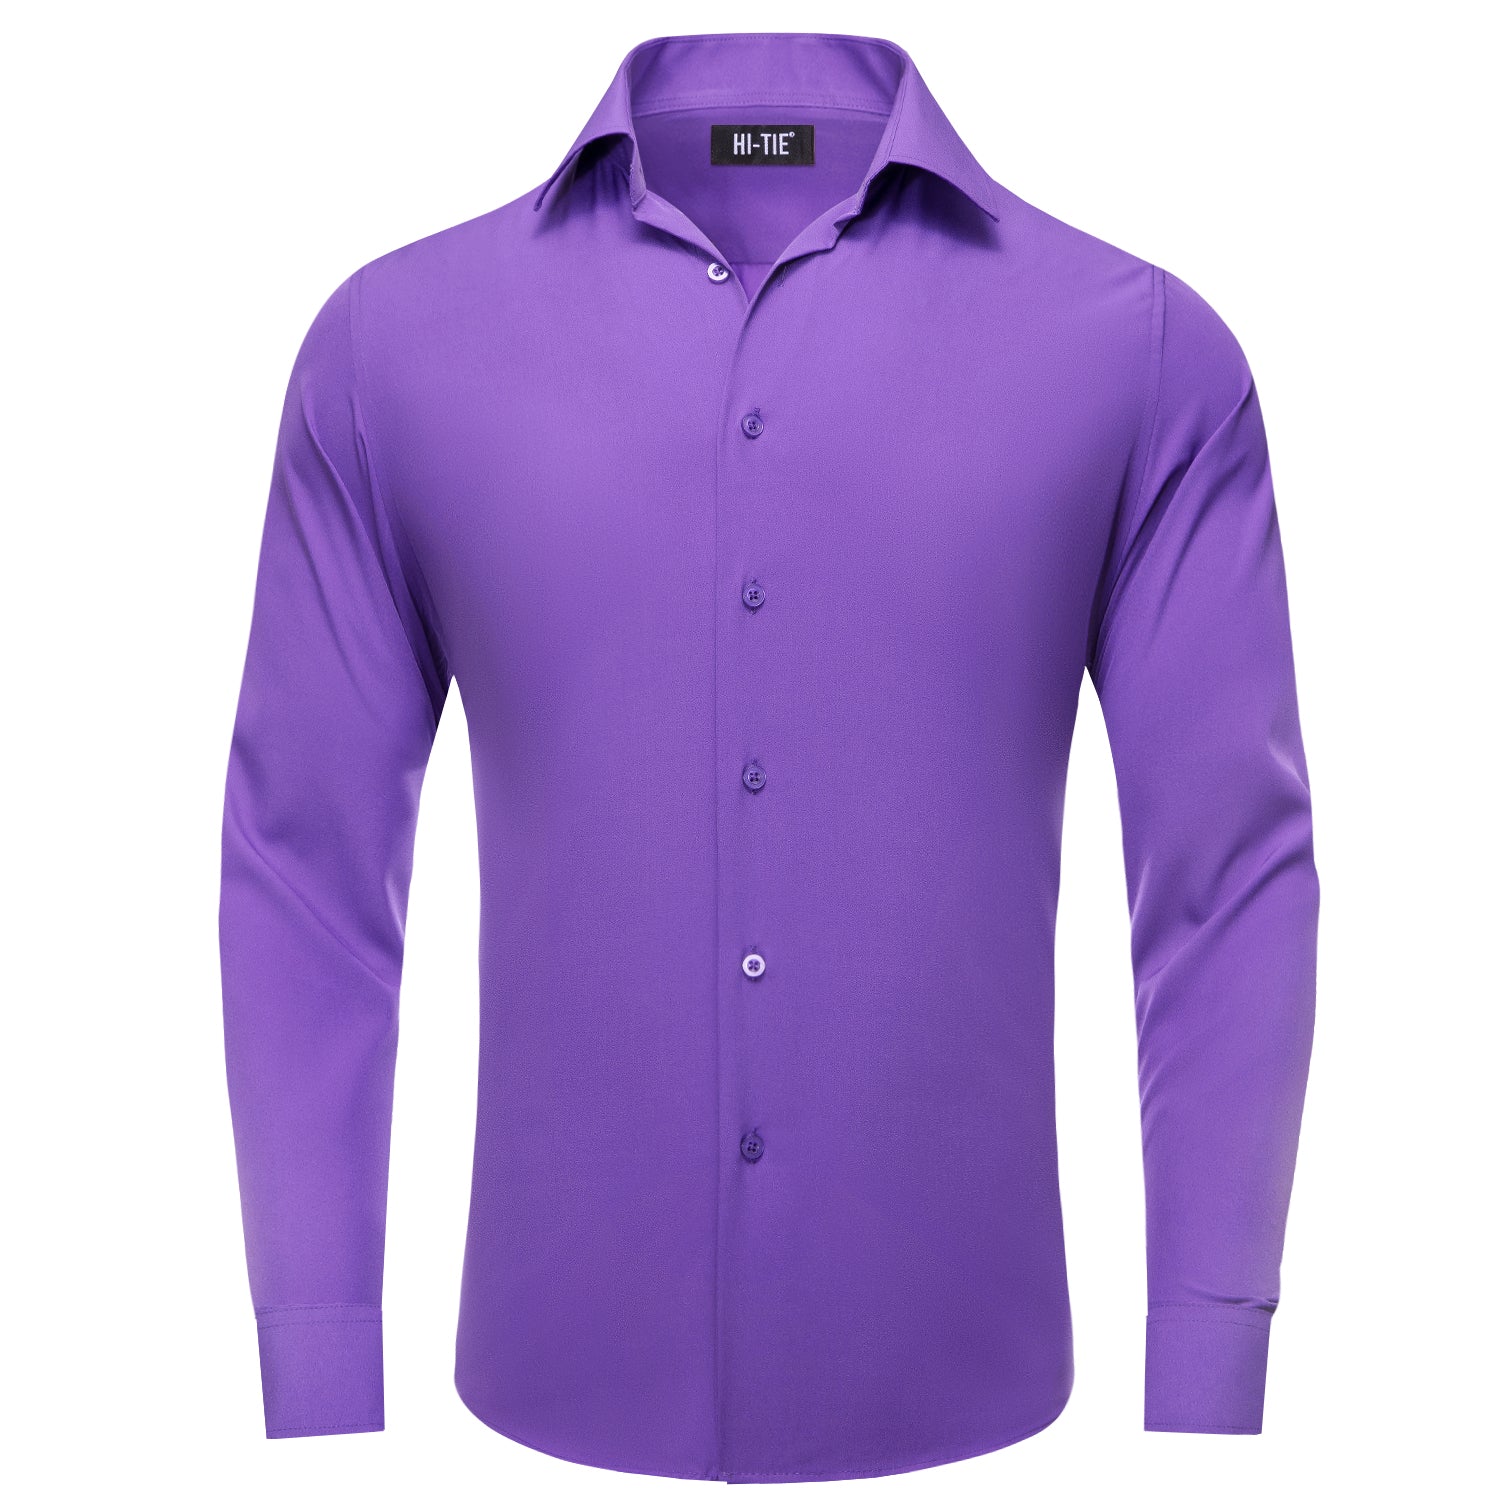 DarkVoilet Purple Solid Casual Men's Dress Shirt 